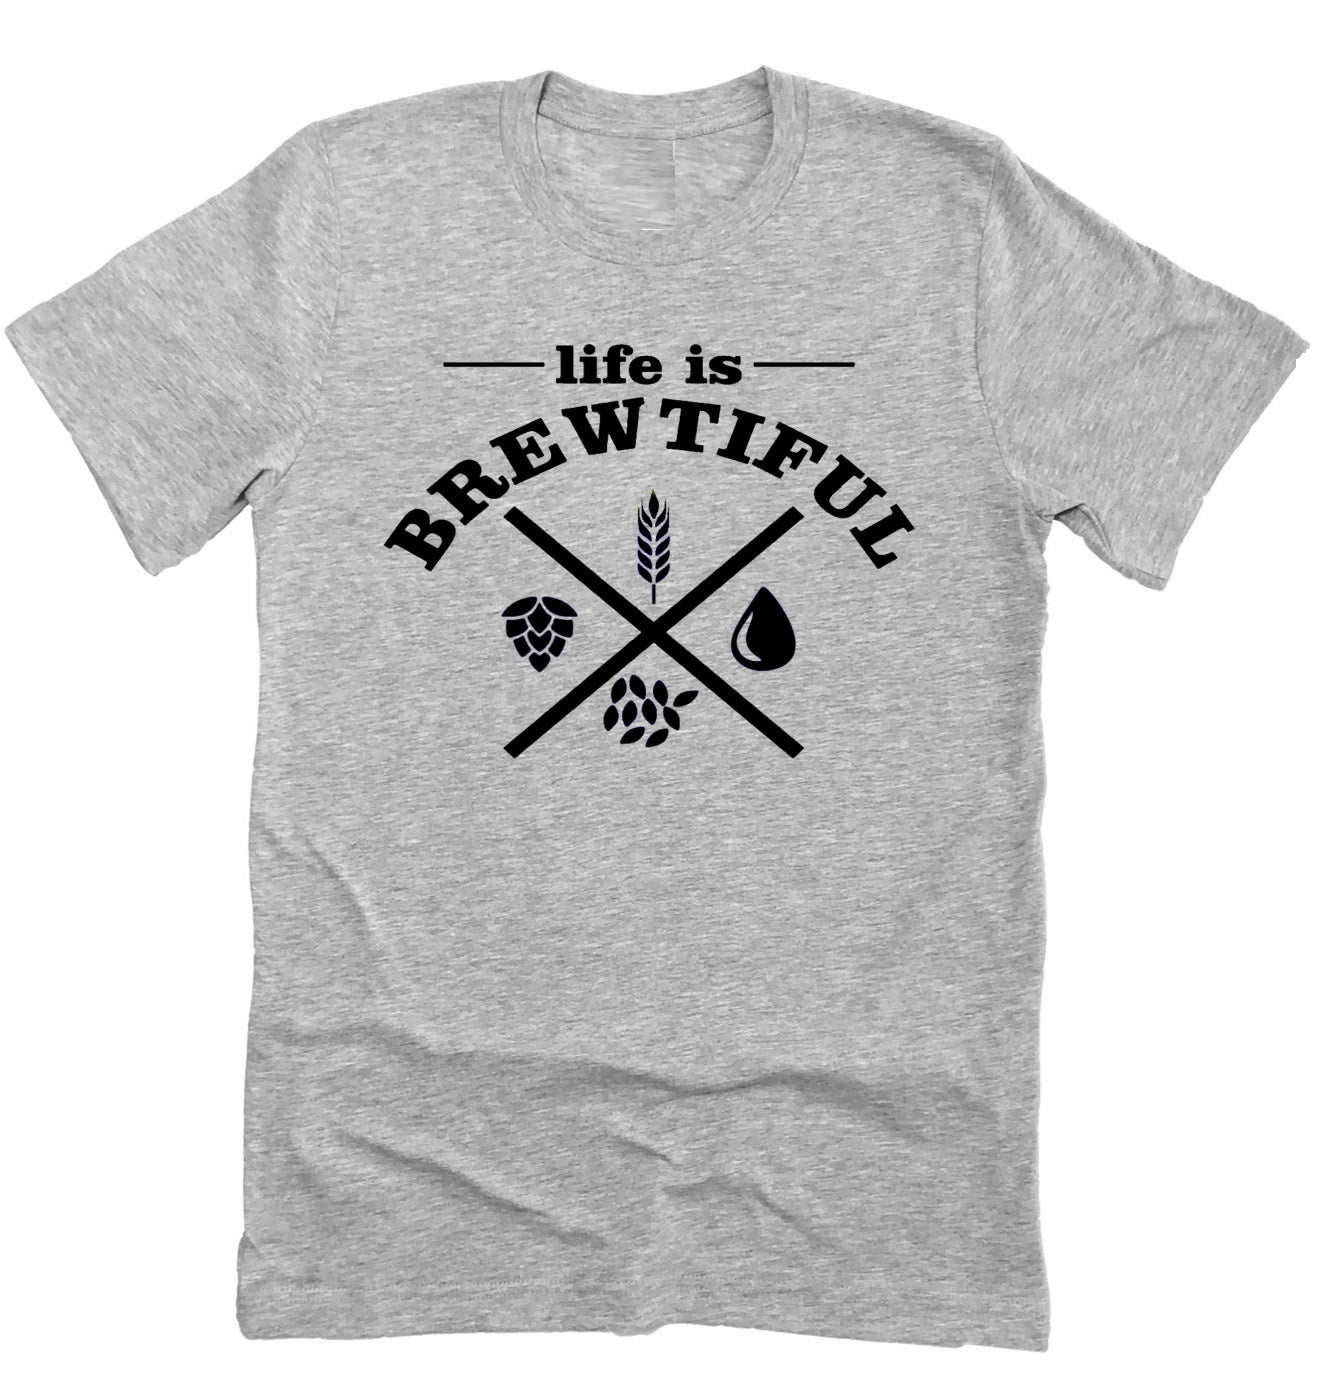 Life Is Brewtiful, Bar Shirt, Brewery Funny Shirt Novelty T-shirt Tee